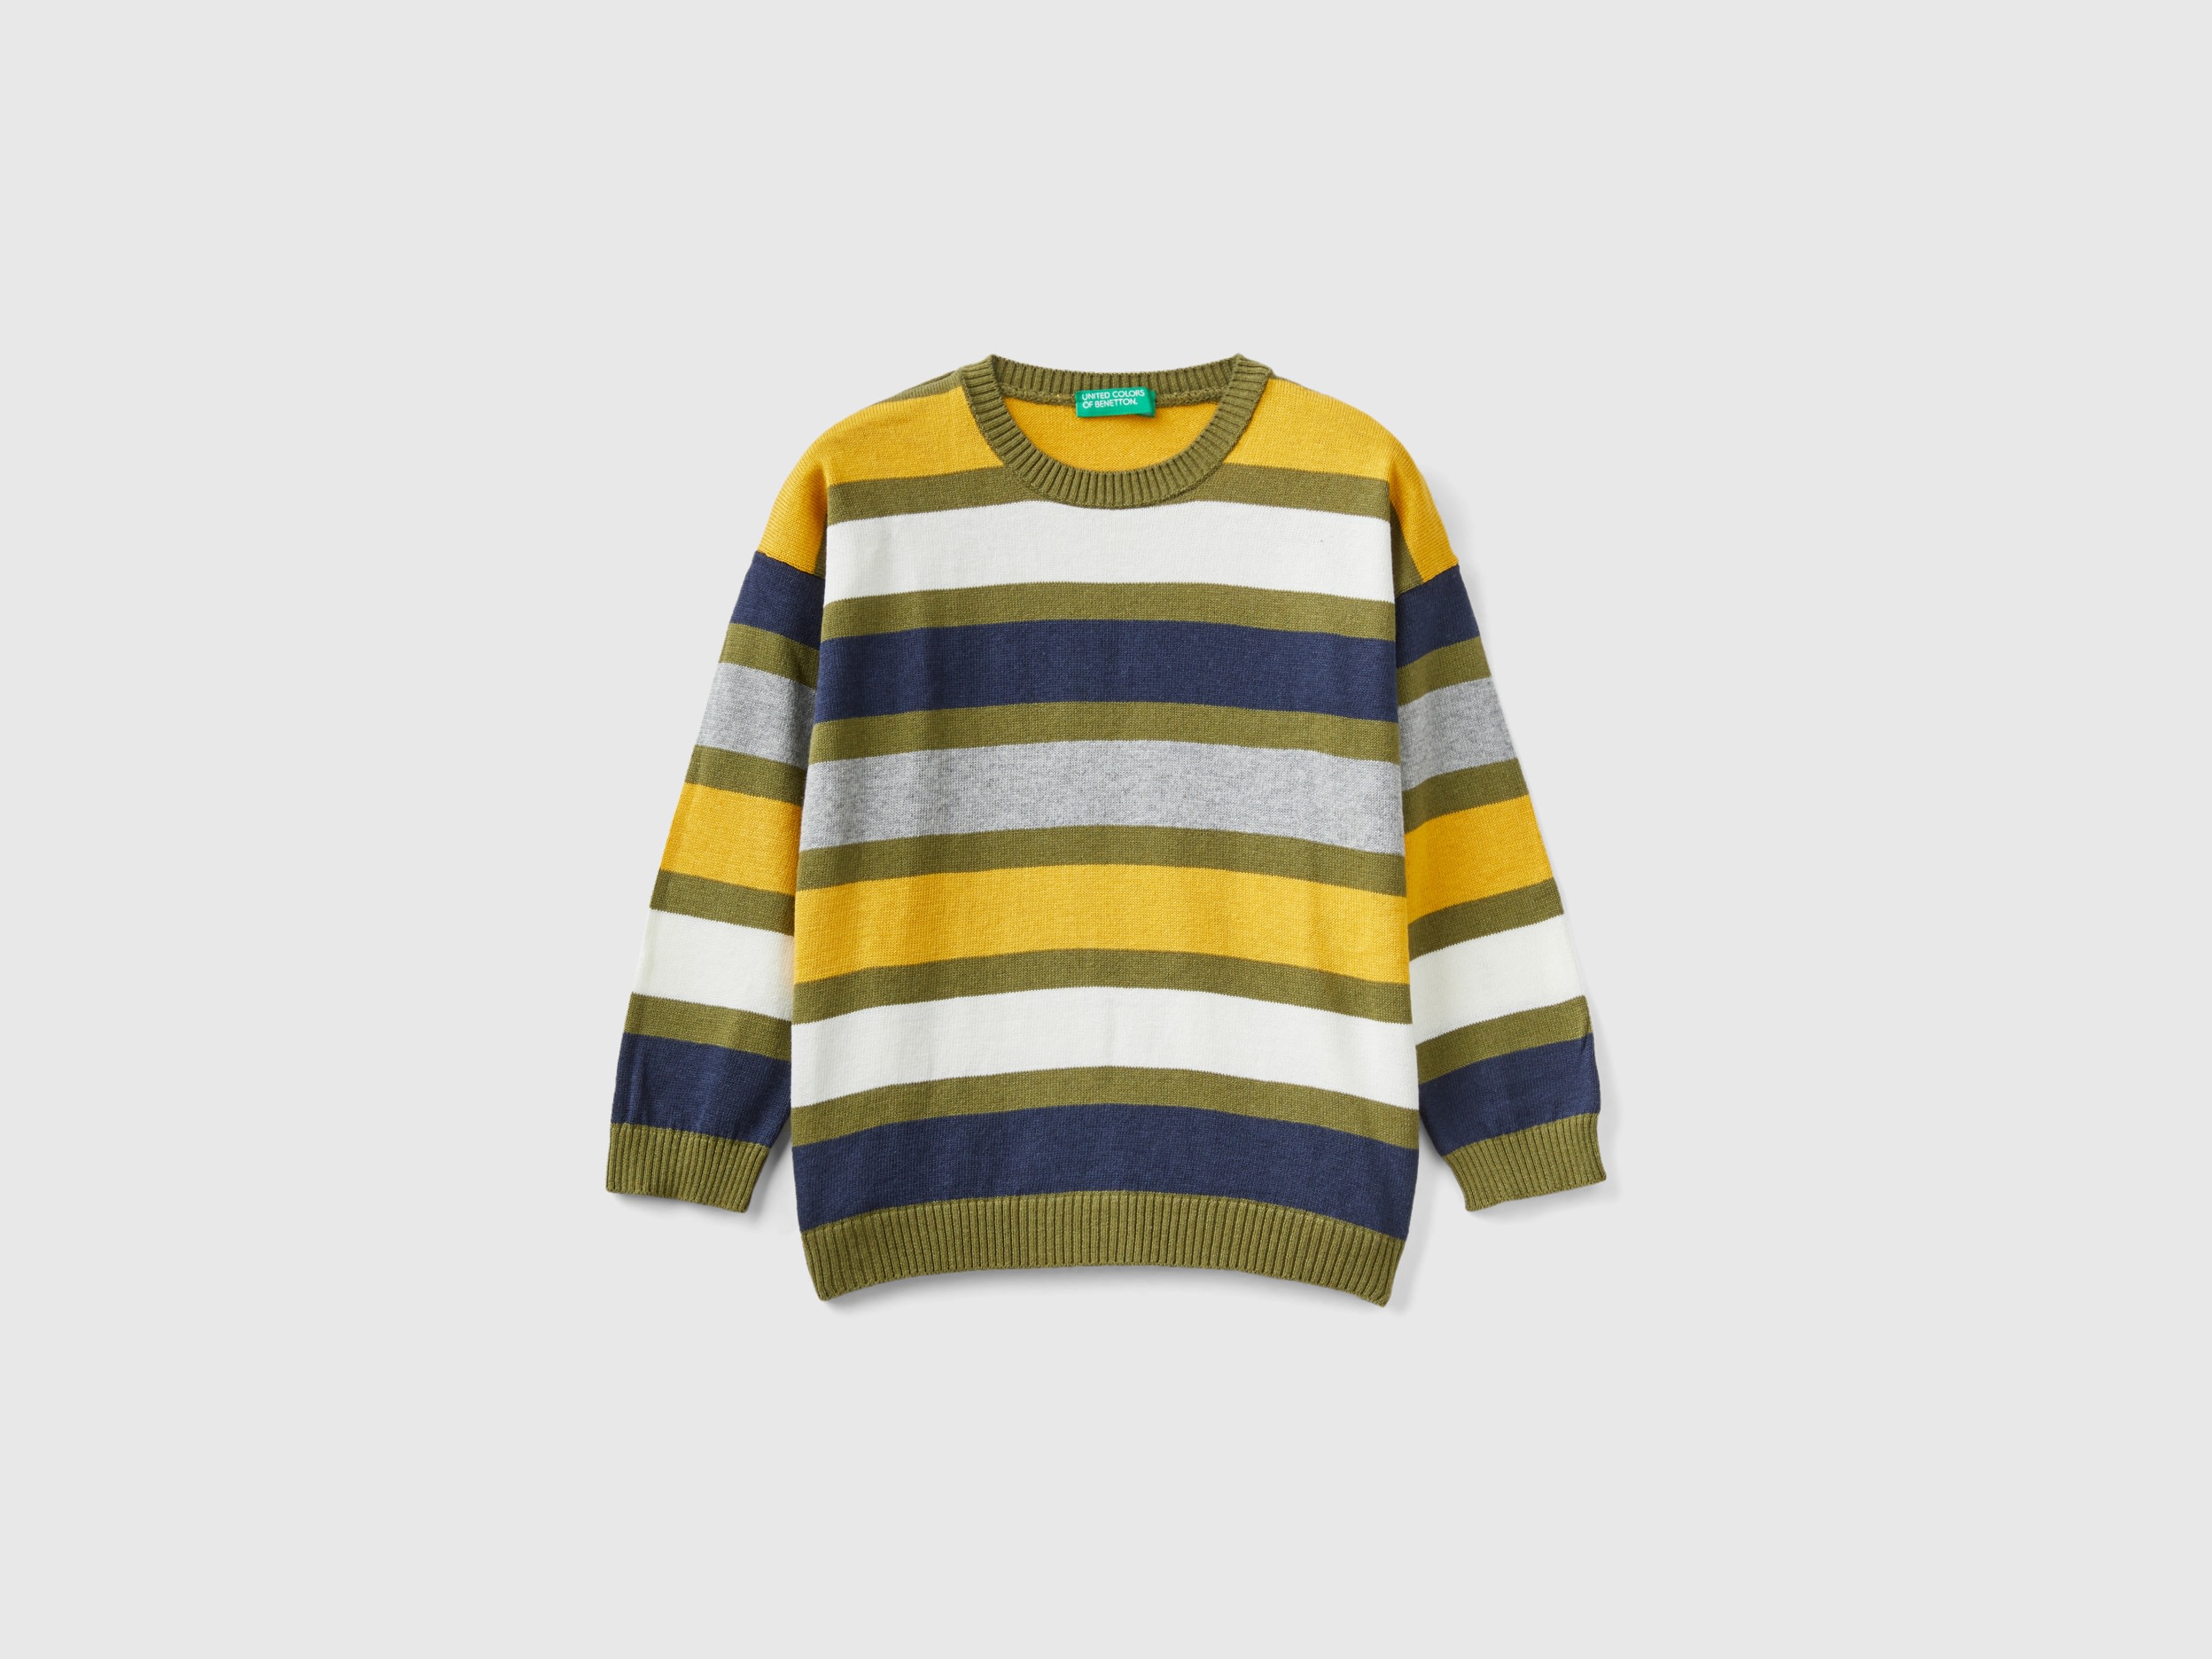 Benetton, Sweater With Multicolor Stripes, size 18-24, Multi-color, Kids